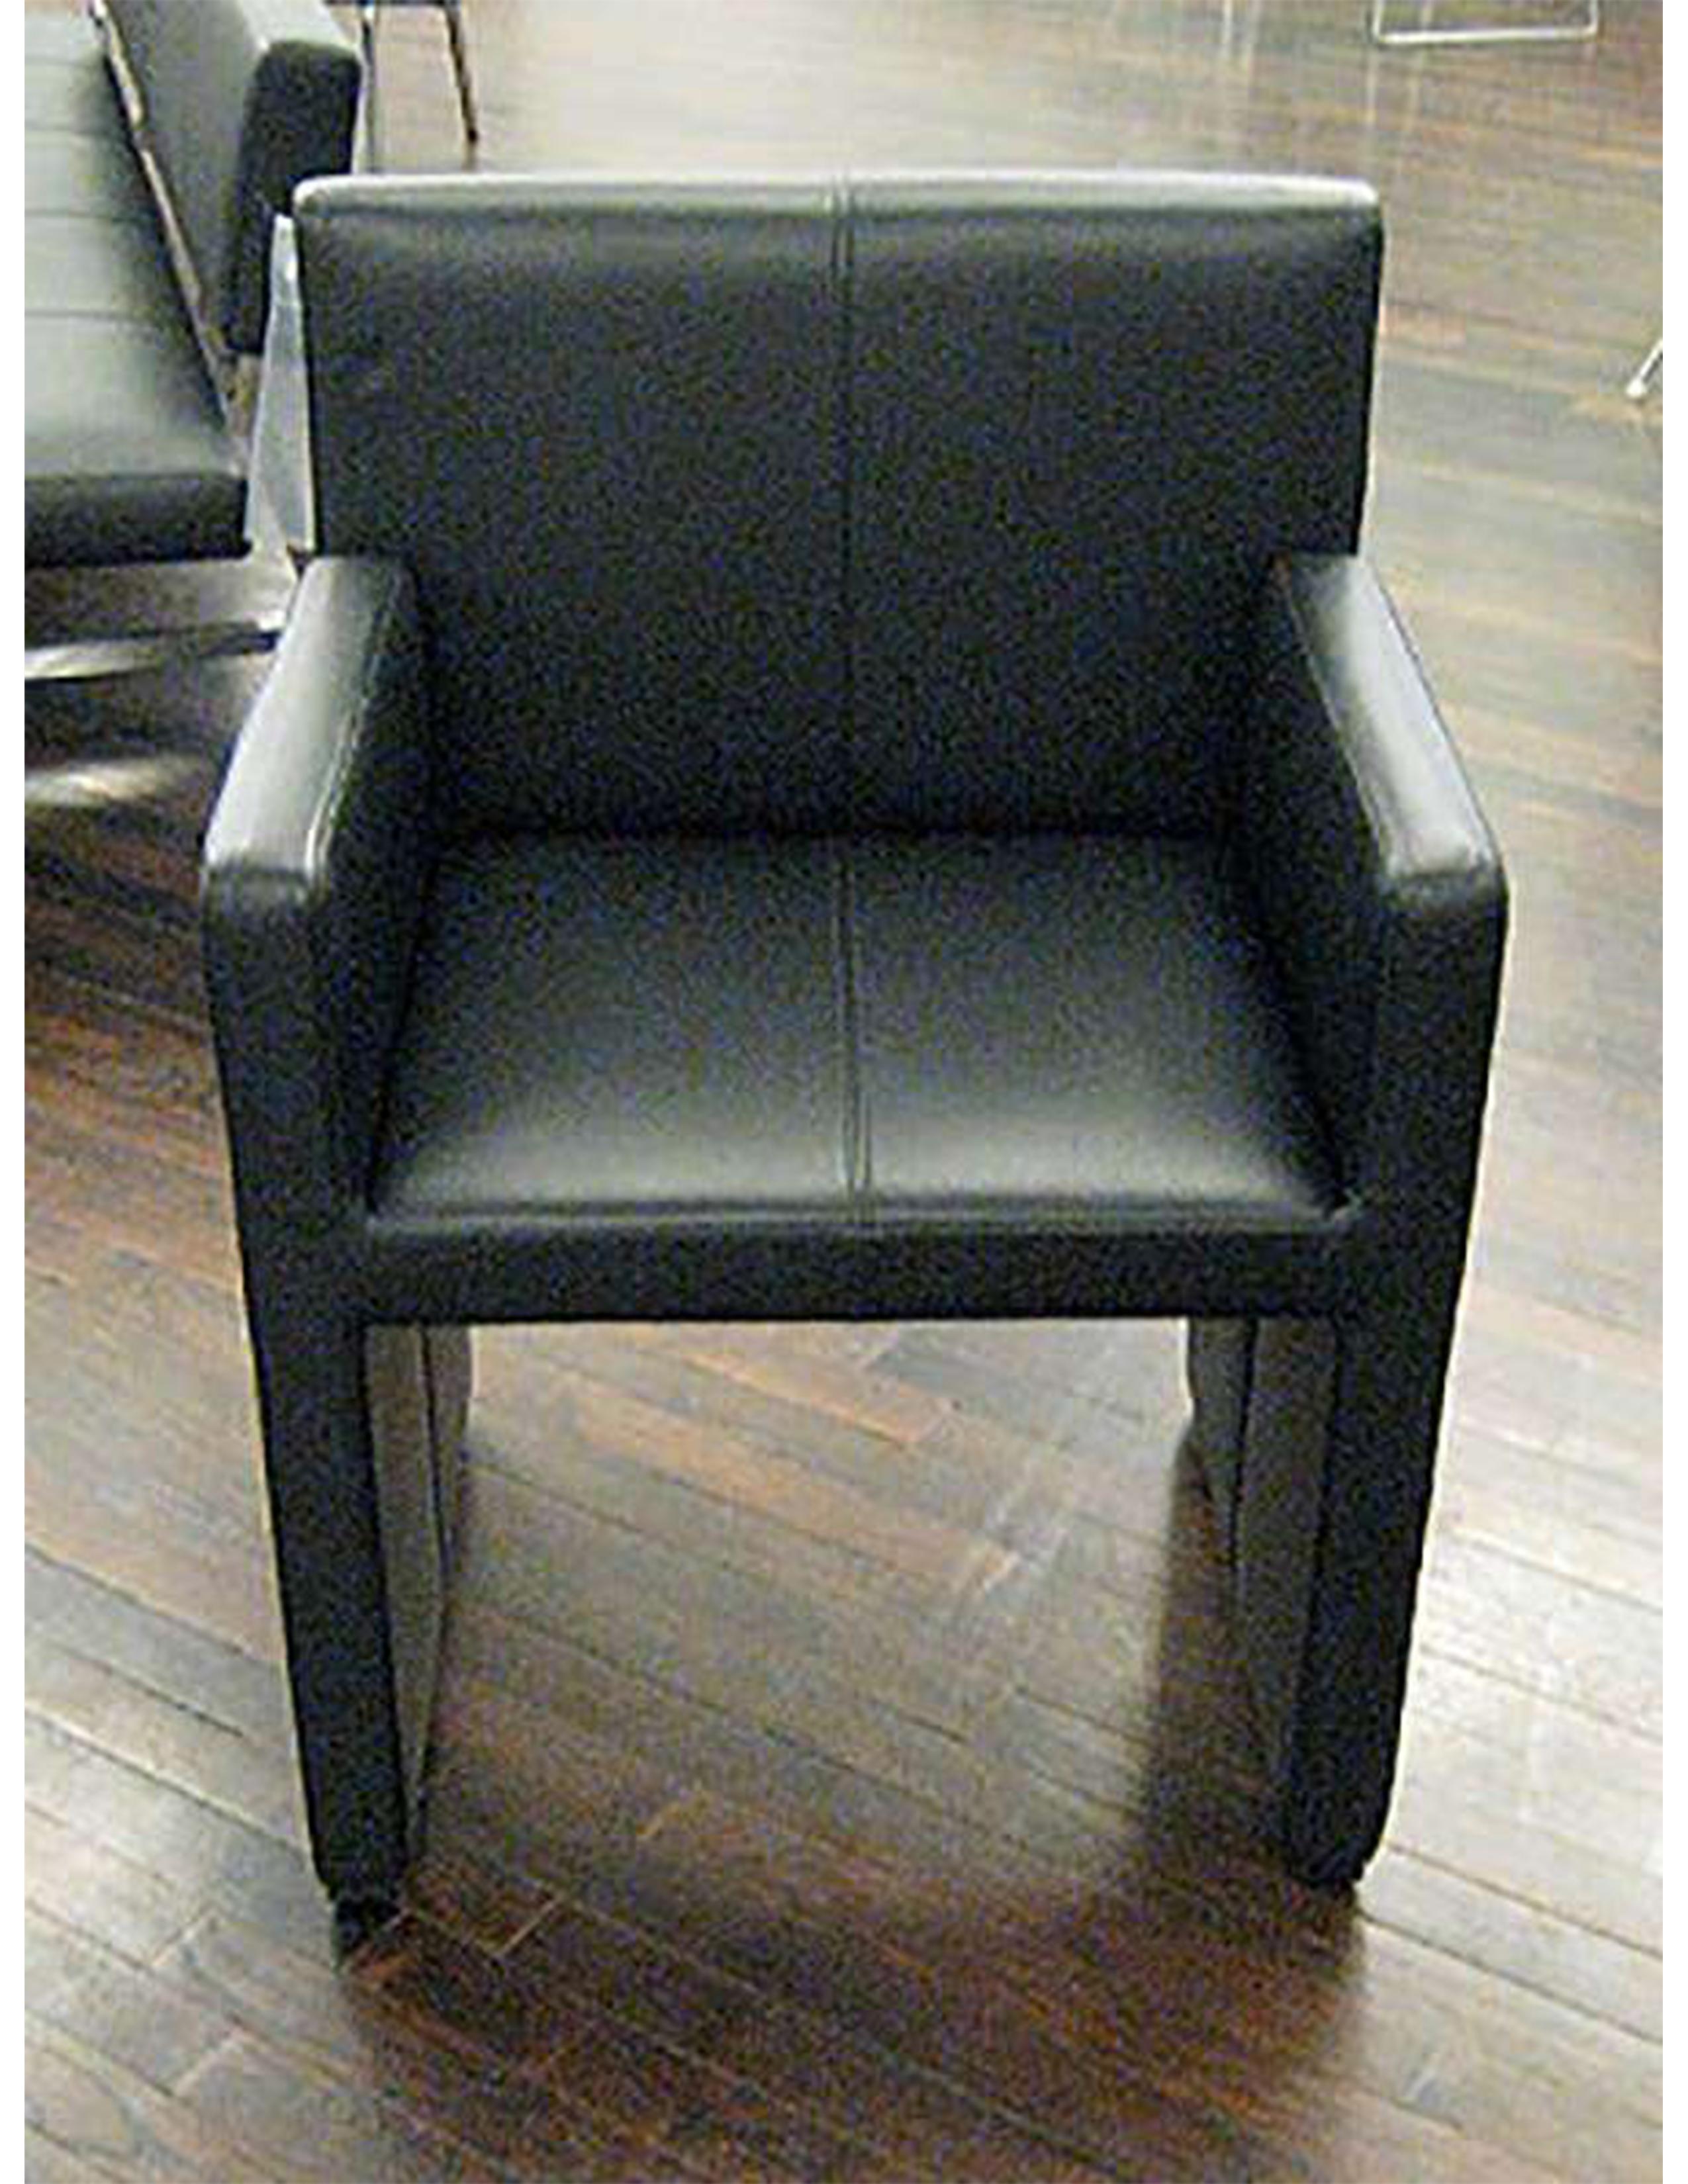 #13364 Wittmann Corso armchair
Leather: black
Measures: 21.6